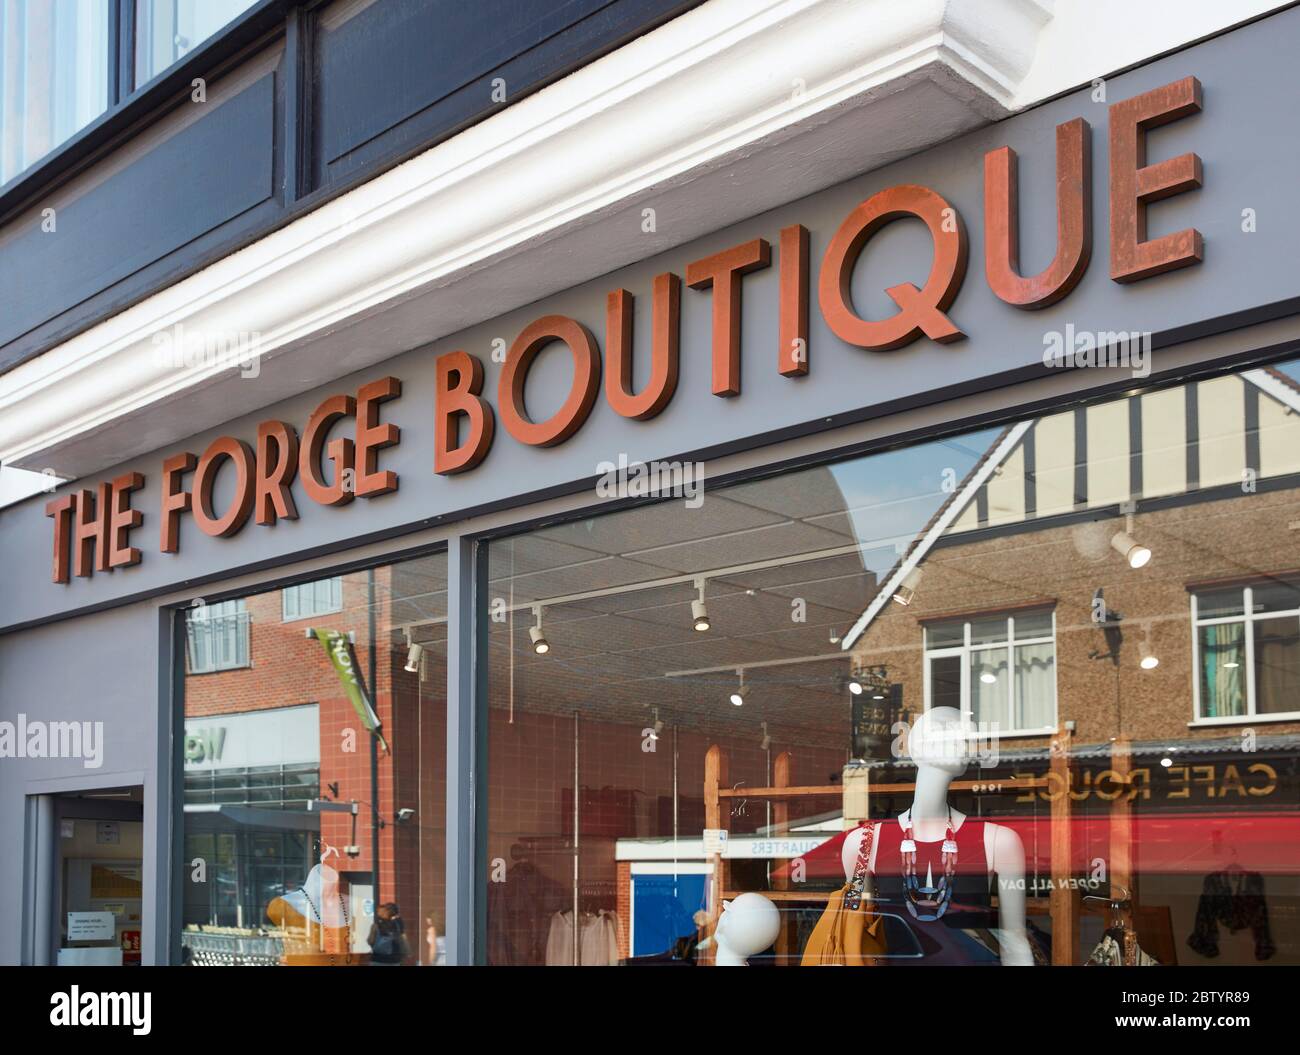 The Forge Boutique shop signage, Gerrards Cross, Buckinghamshire, England, UK Stock Photo